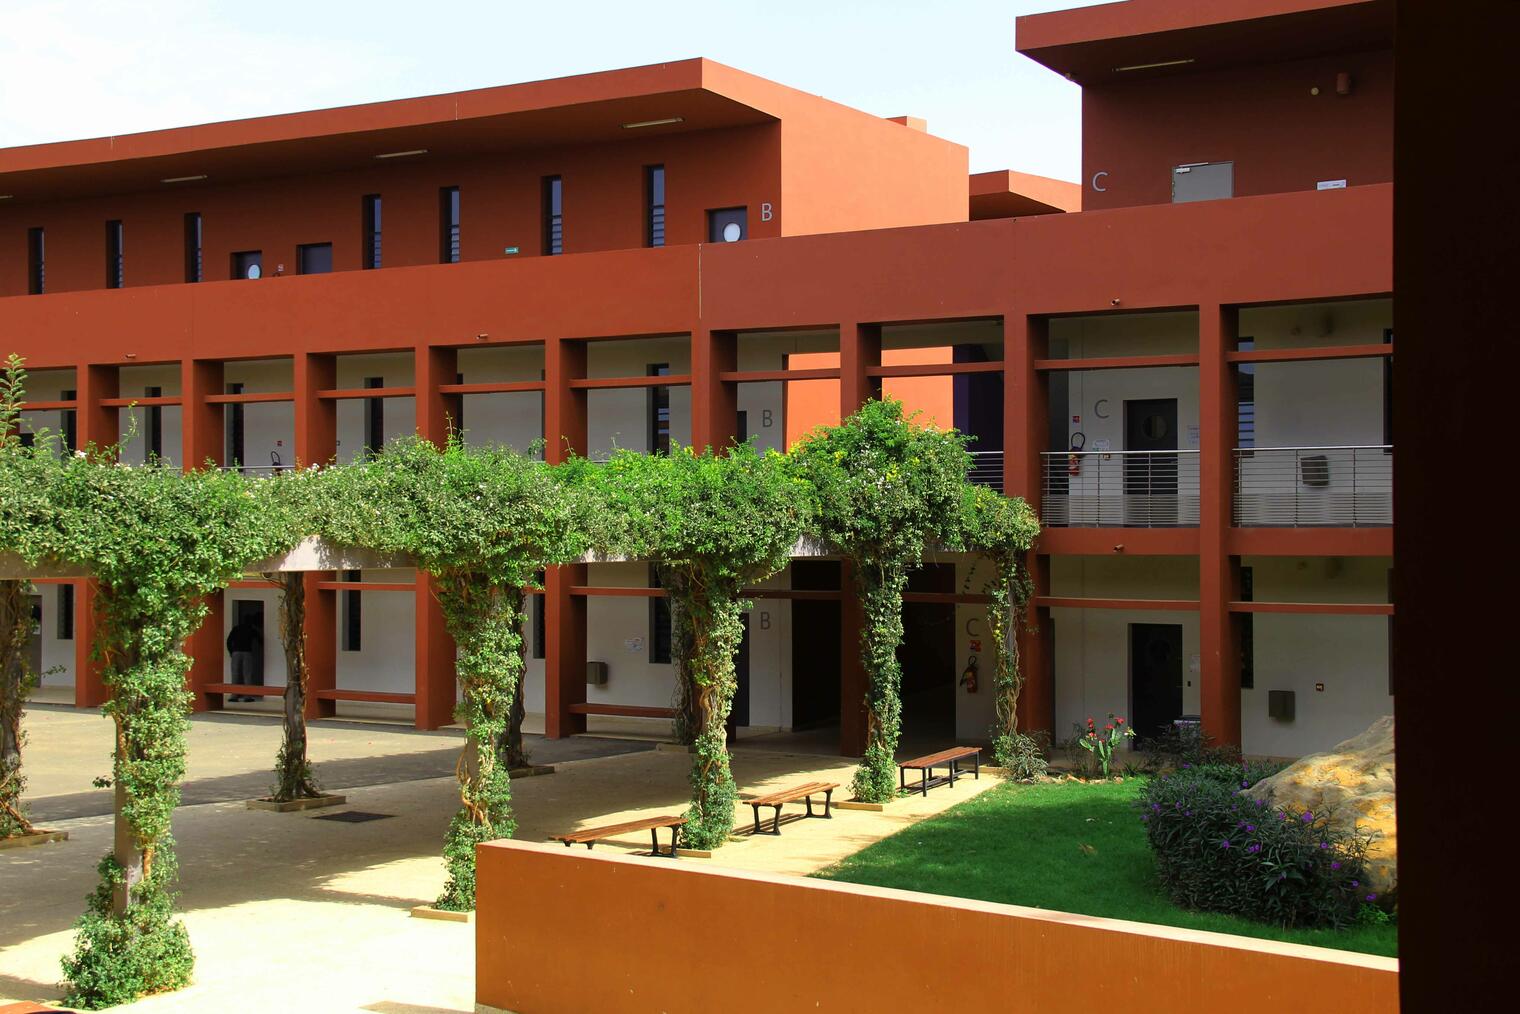 Lycée MERMOZ